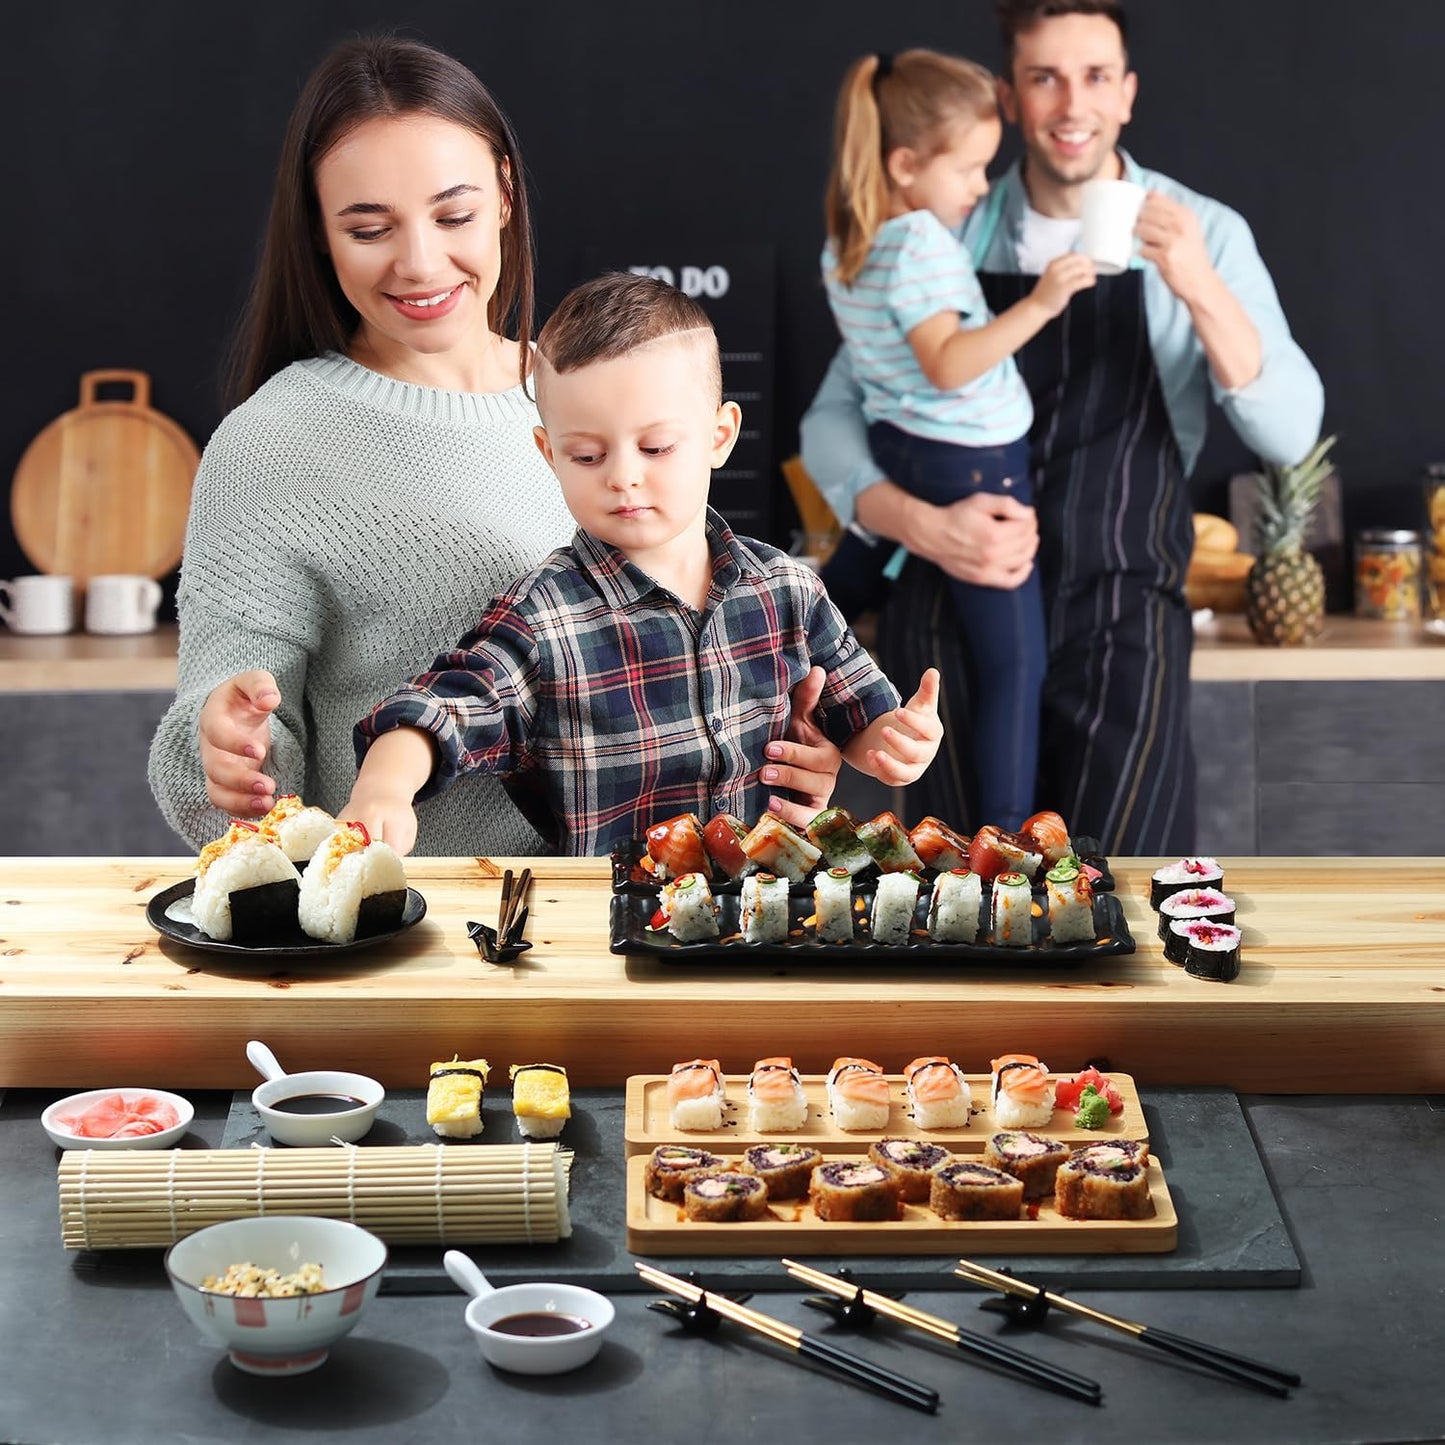 Super Deluxe Sushi Making Kit with Bazooka Roller, Rice Cooker, Onigiri, Nigiri & Musubi Mold, Rice Ball Mold, Bamboo Rolling Mat, Knife, Guide Book & More